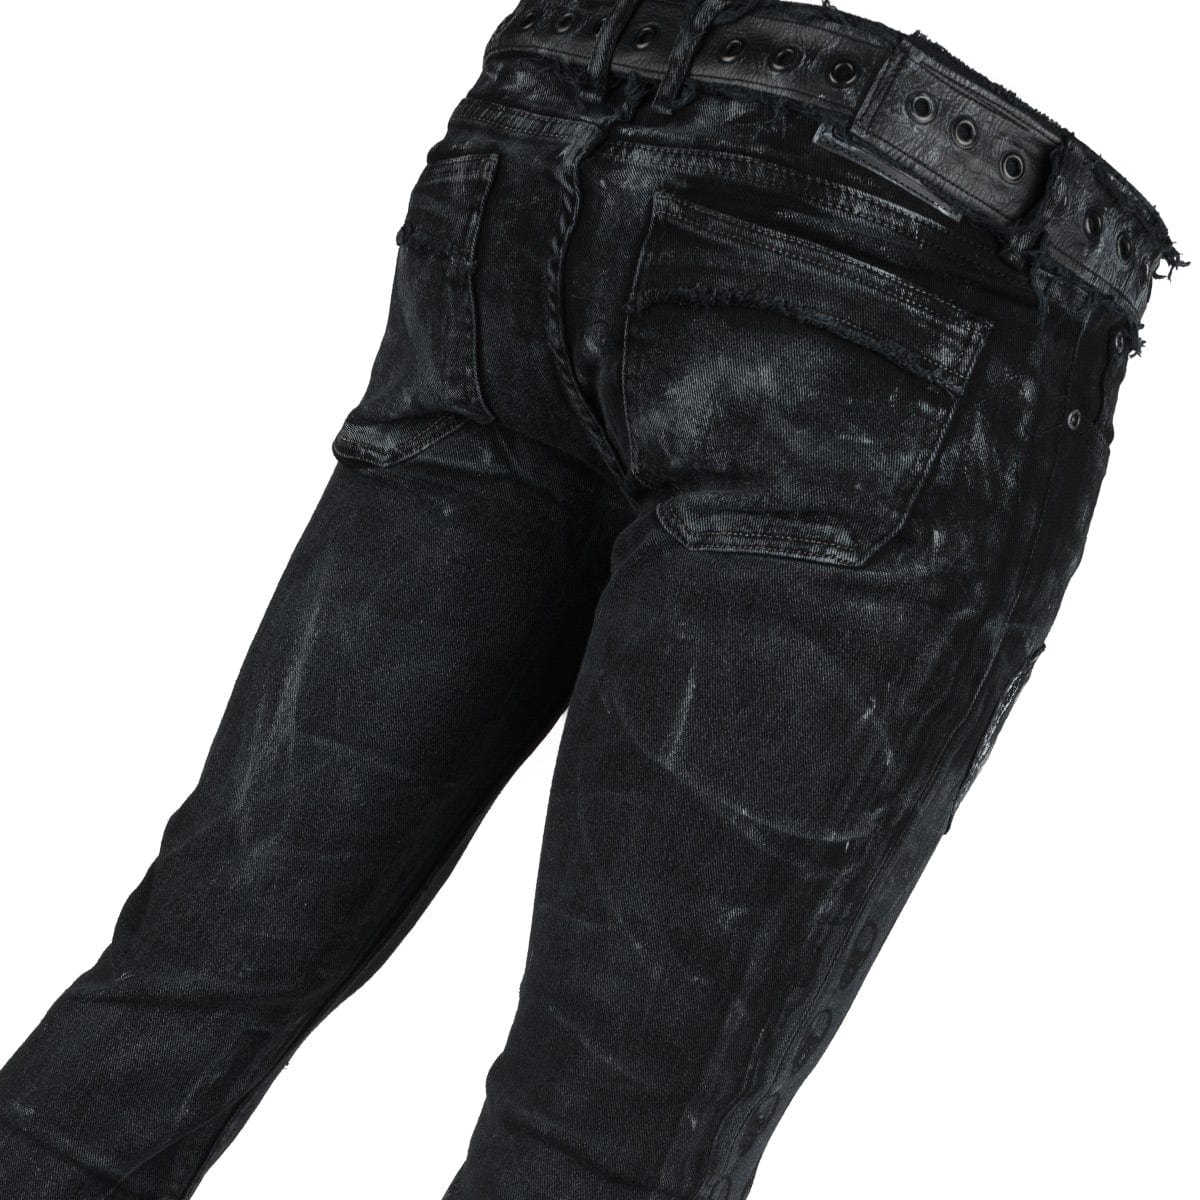 Wornstar Custom Jeans - RAMBLE ON